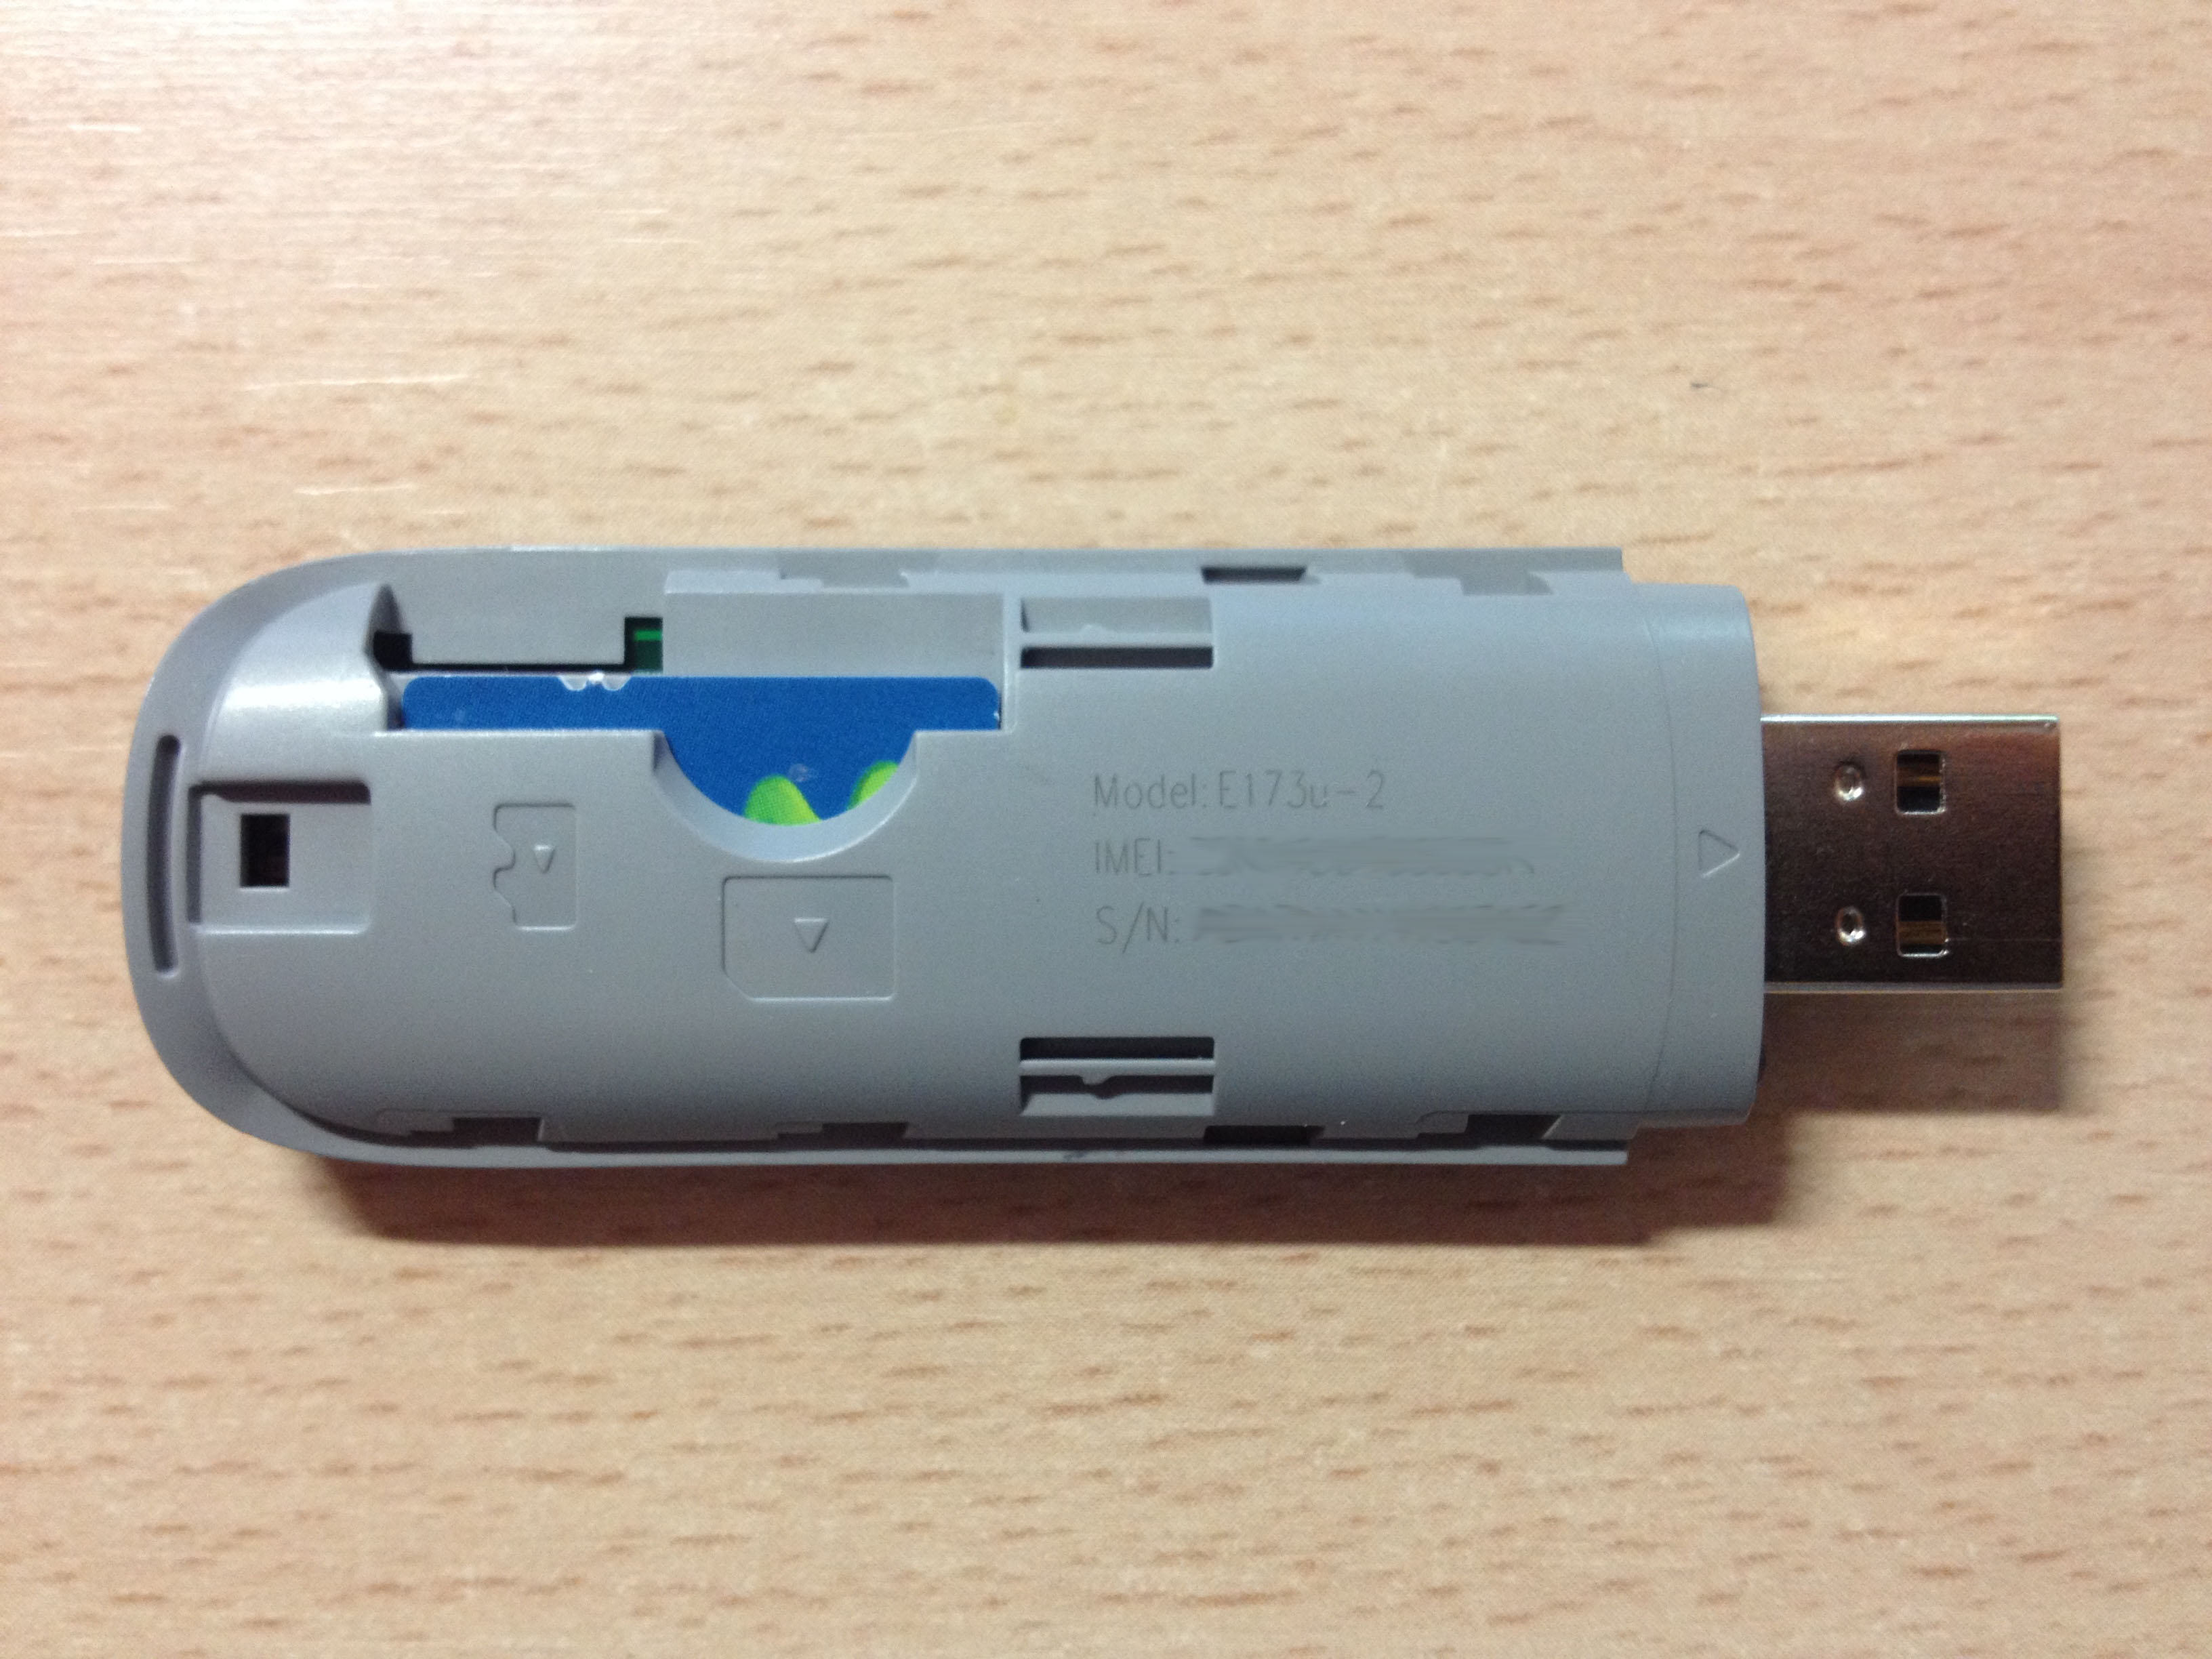 Modem 3G USB Huawei E173u-2